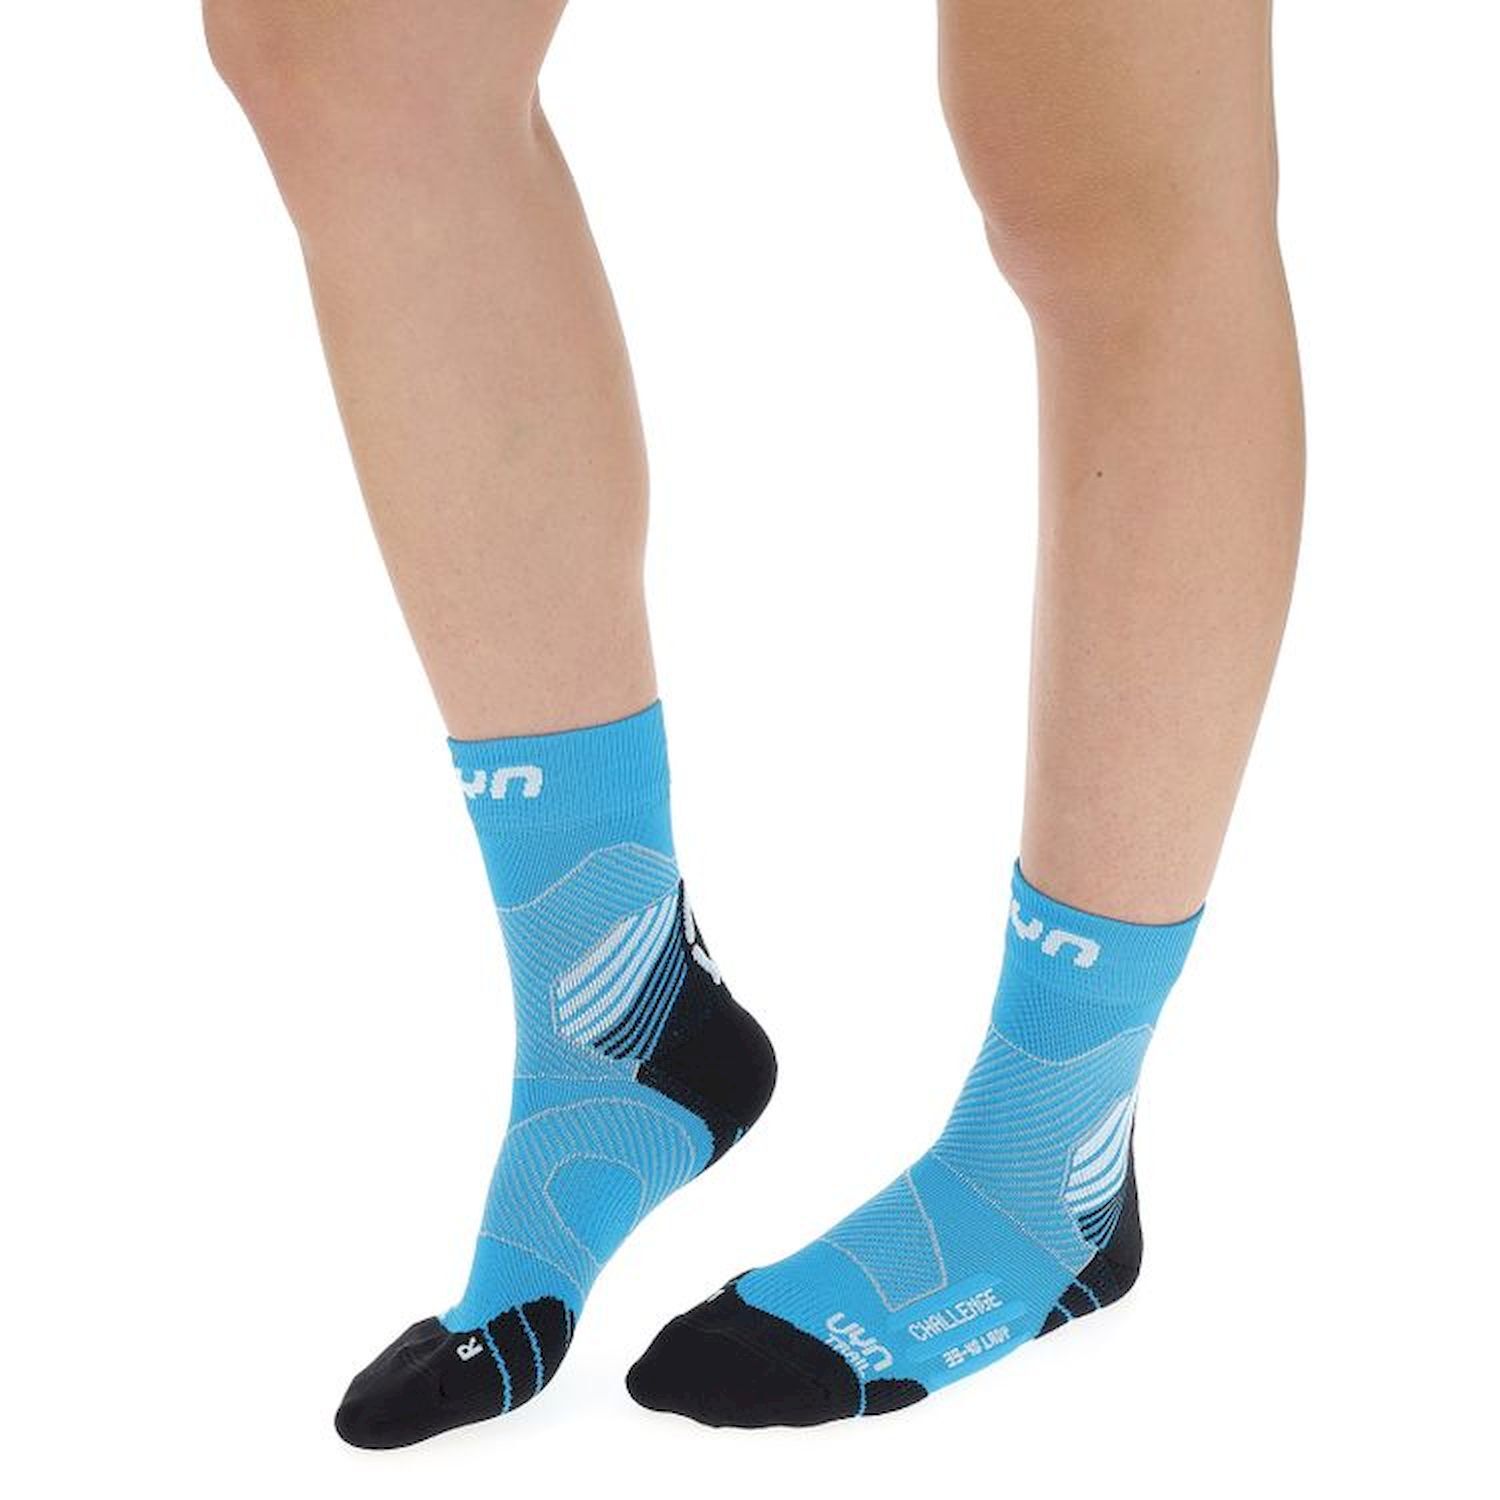 Uyn Run Trail Challenge Socks - Trail running socks - Women's